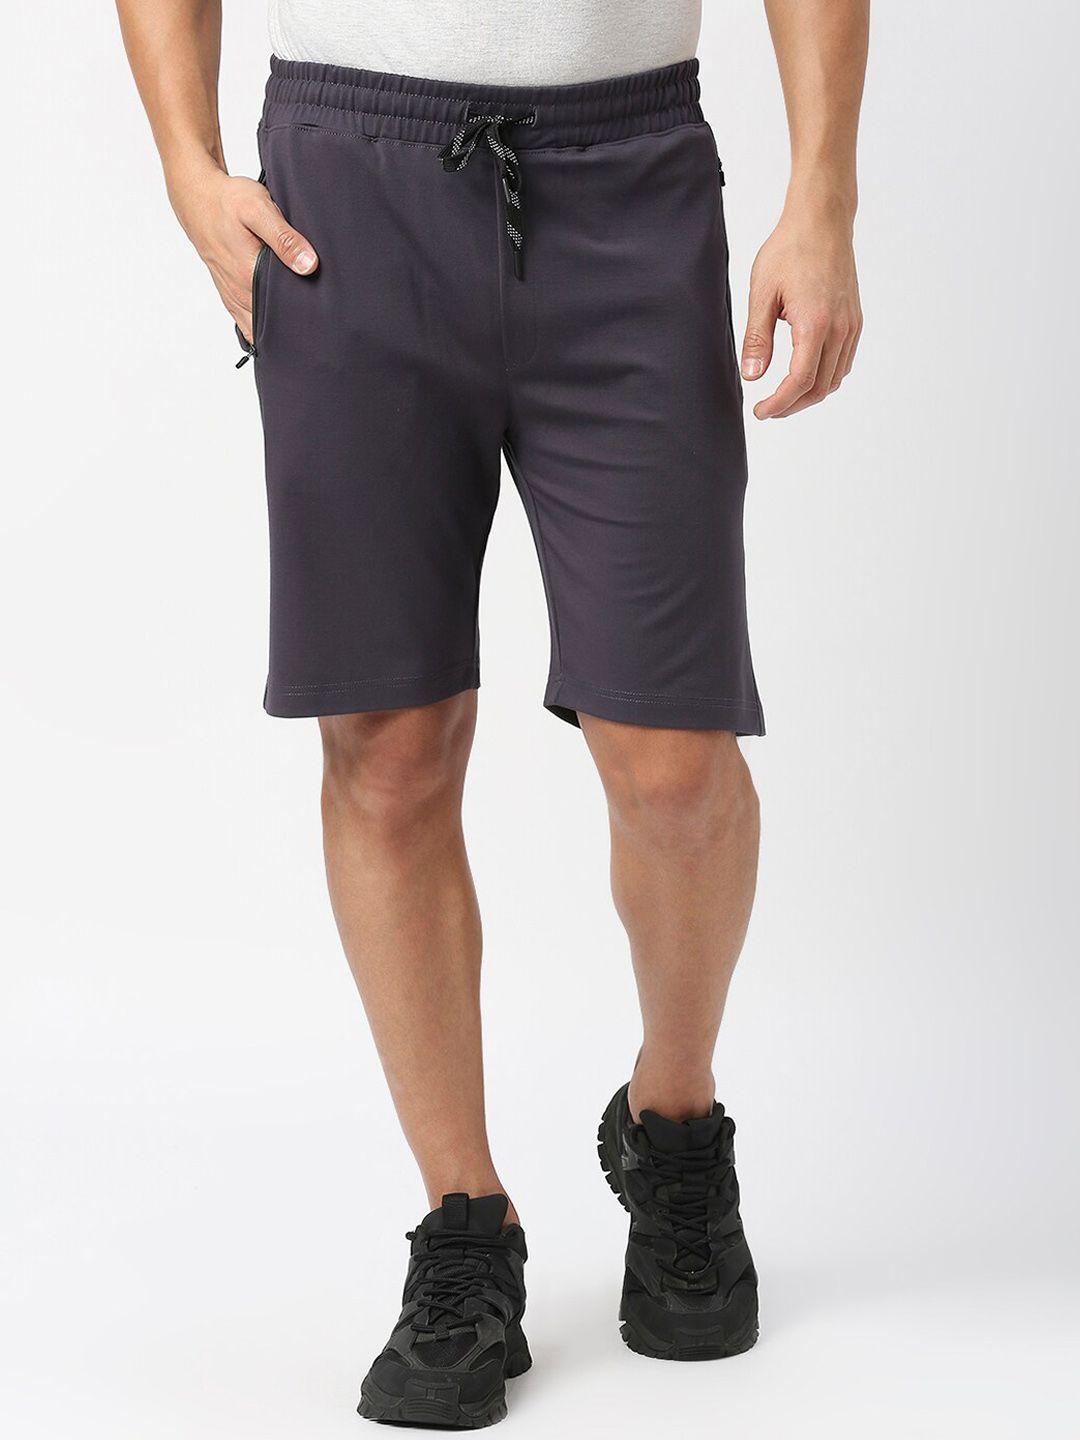 dragon-hill-men-mid-rise-slim-fit-casual-shorts